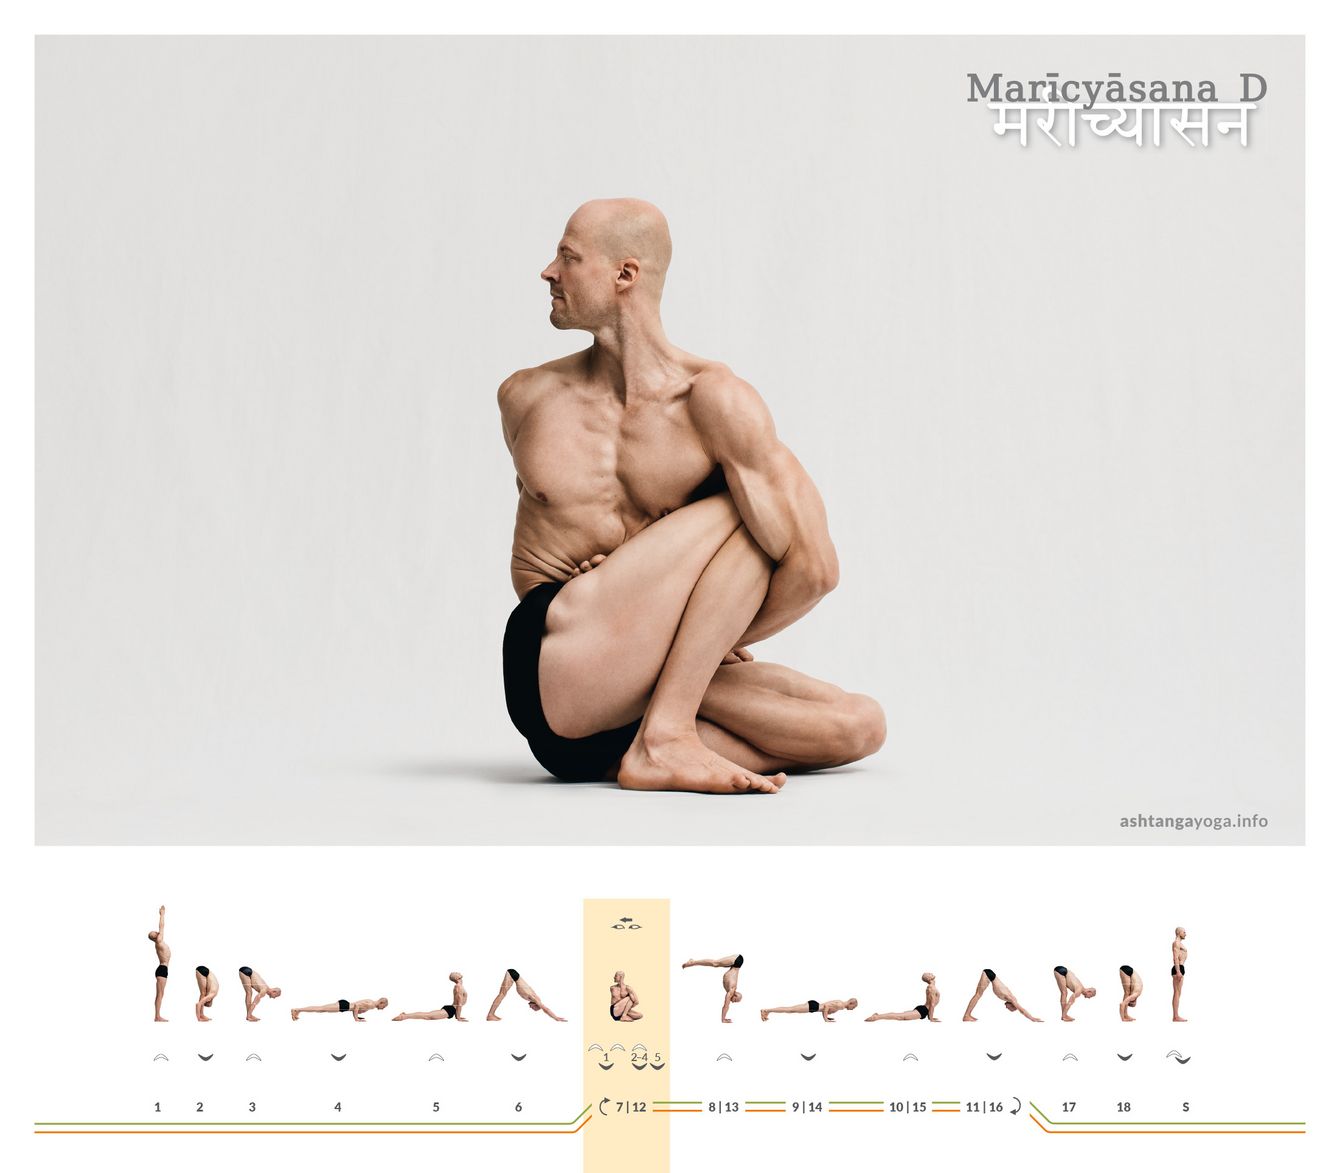 The fourth and final variation of Marichyasana combines the rotation from Marichyasana C with the leg position of Marichyasana B.